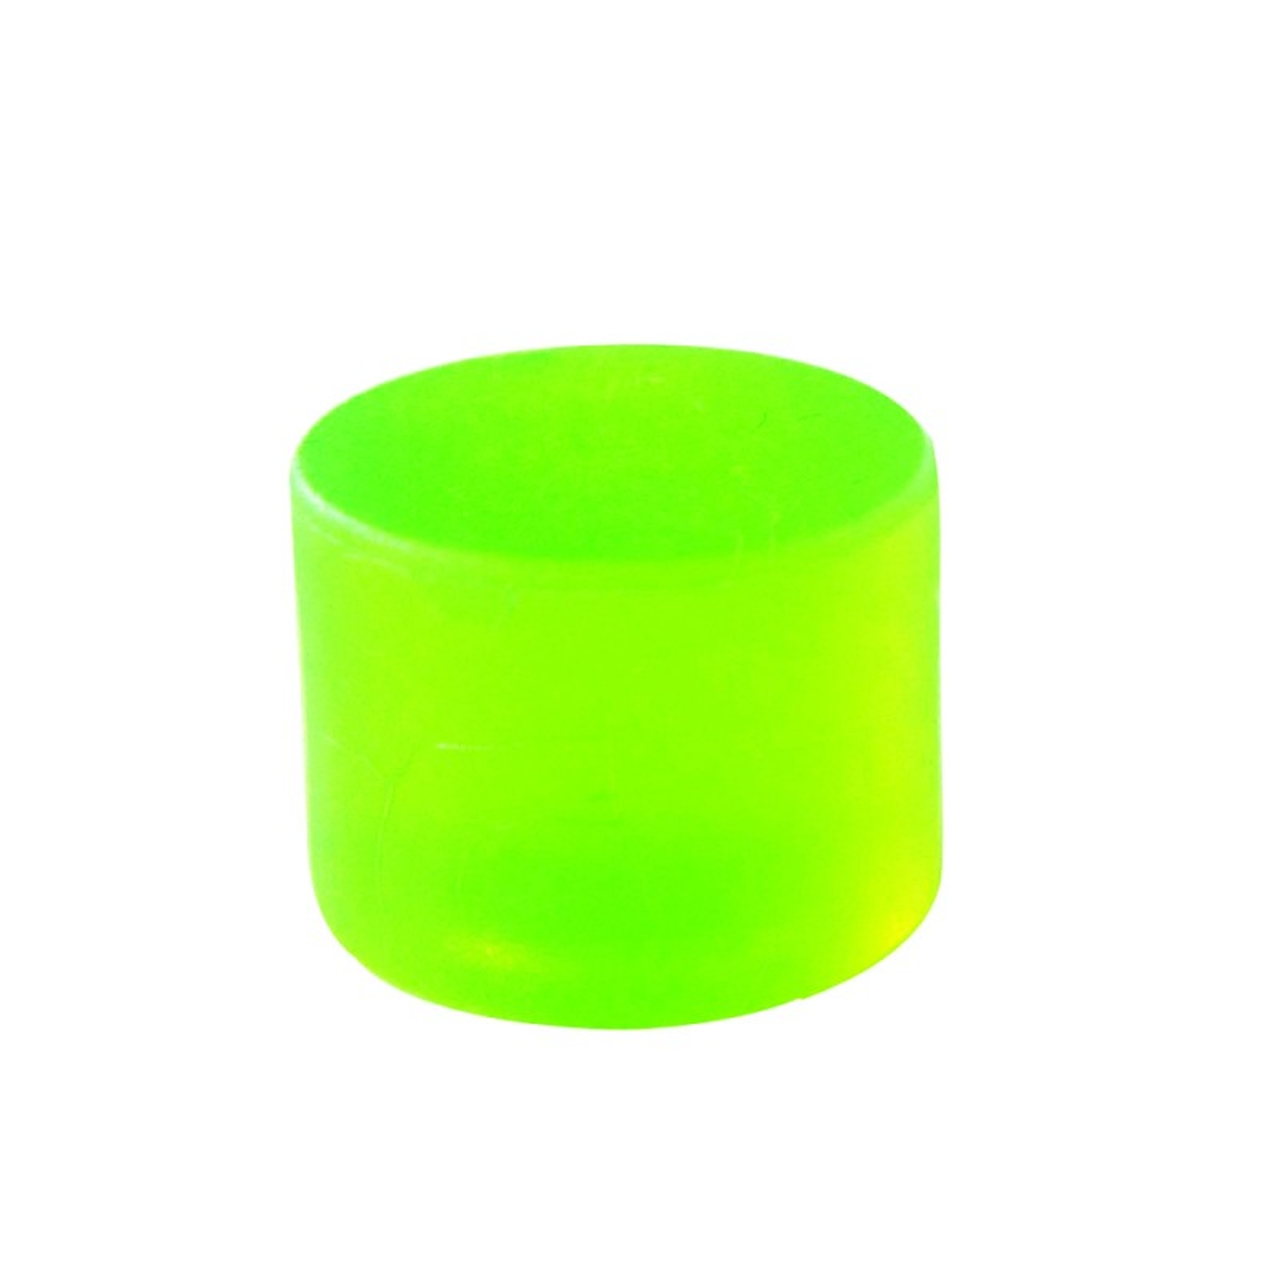 Marcador de Plástico: Gordo (Verde Fluorescente)